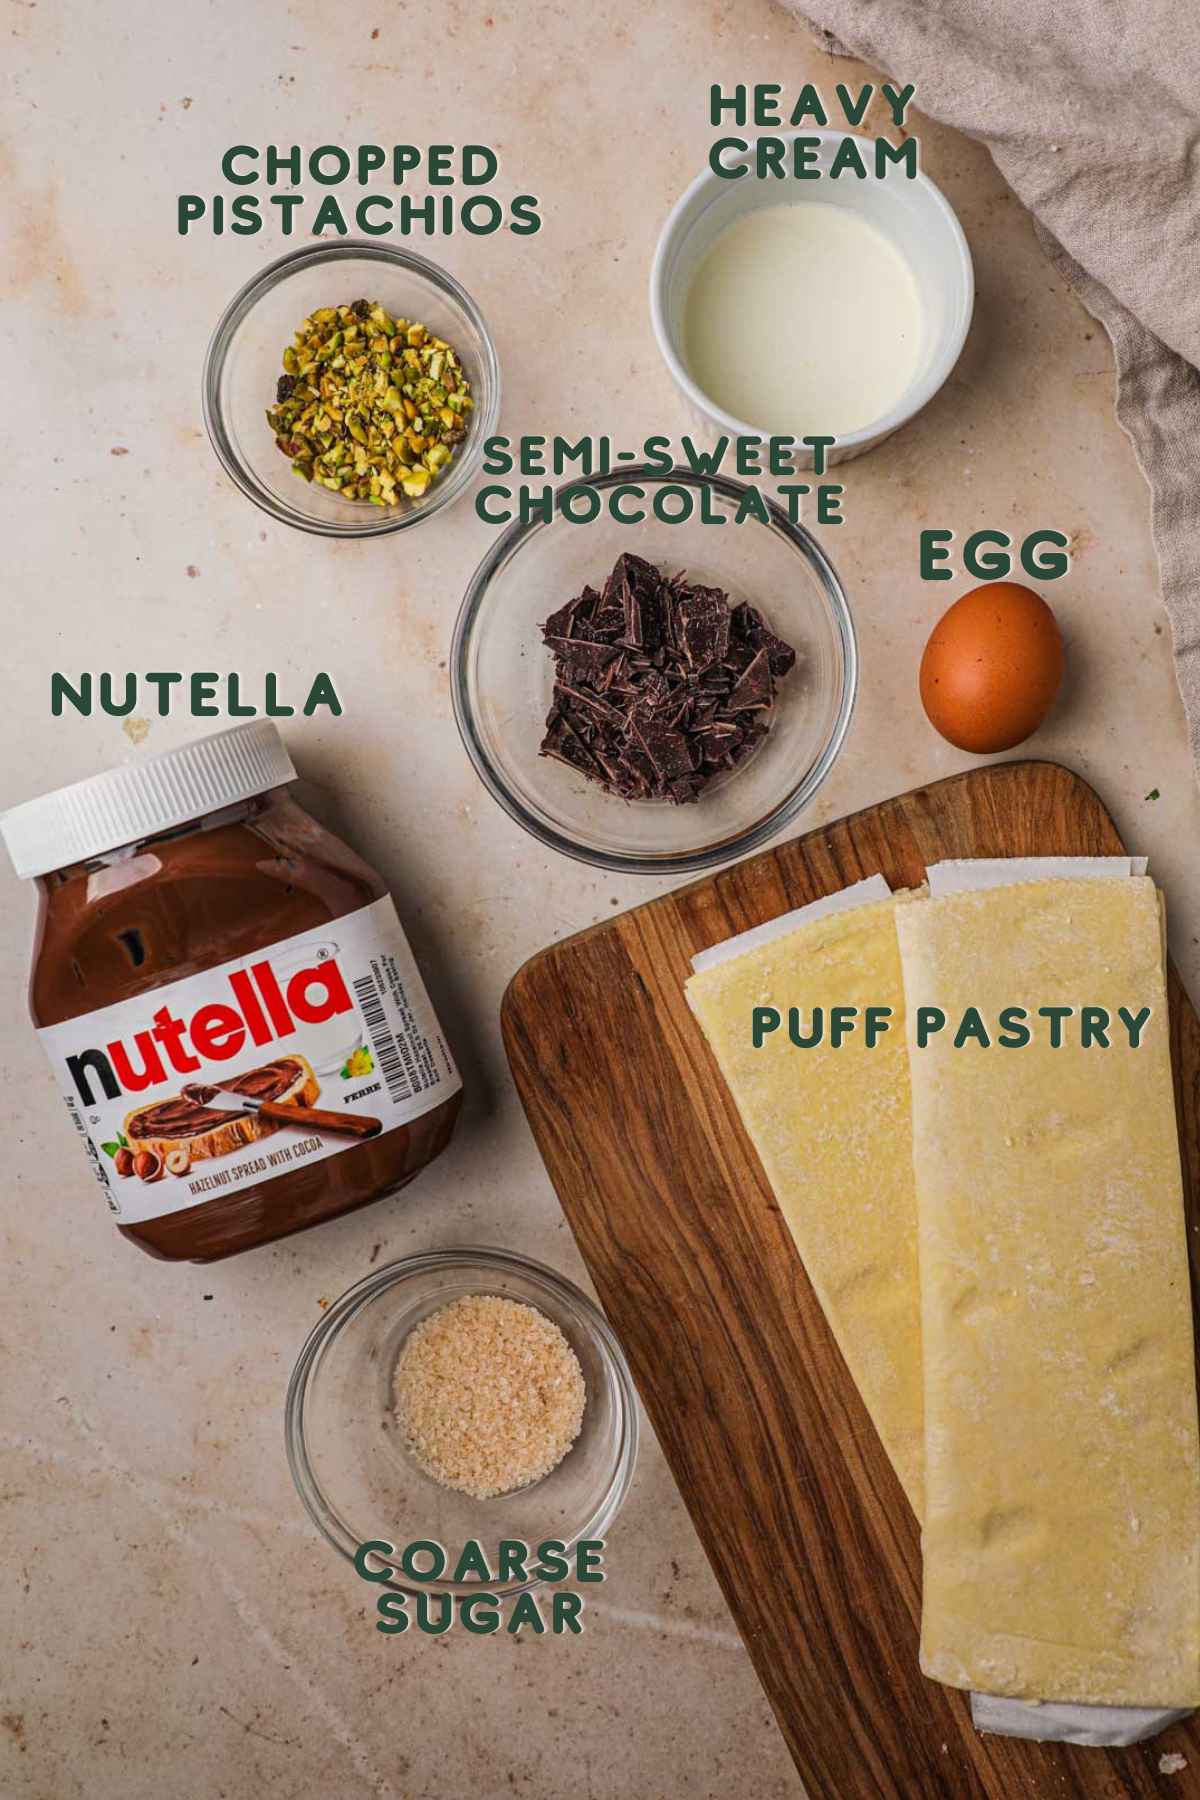 Ingredients to make chocolate twists, puff pastry, semi-sweet chocolate, nutella, egg, heavy cream, chopped pistachio, coarse sugar.